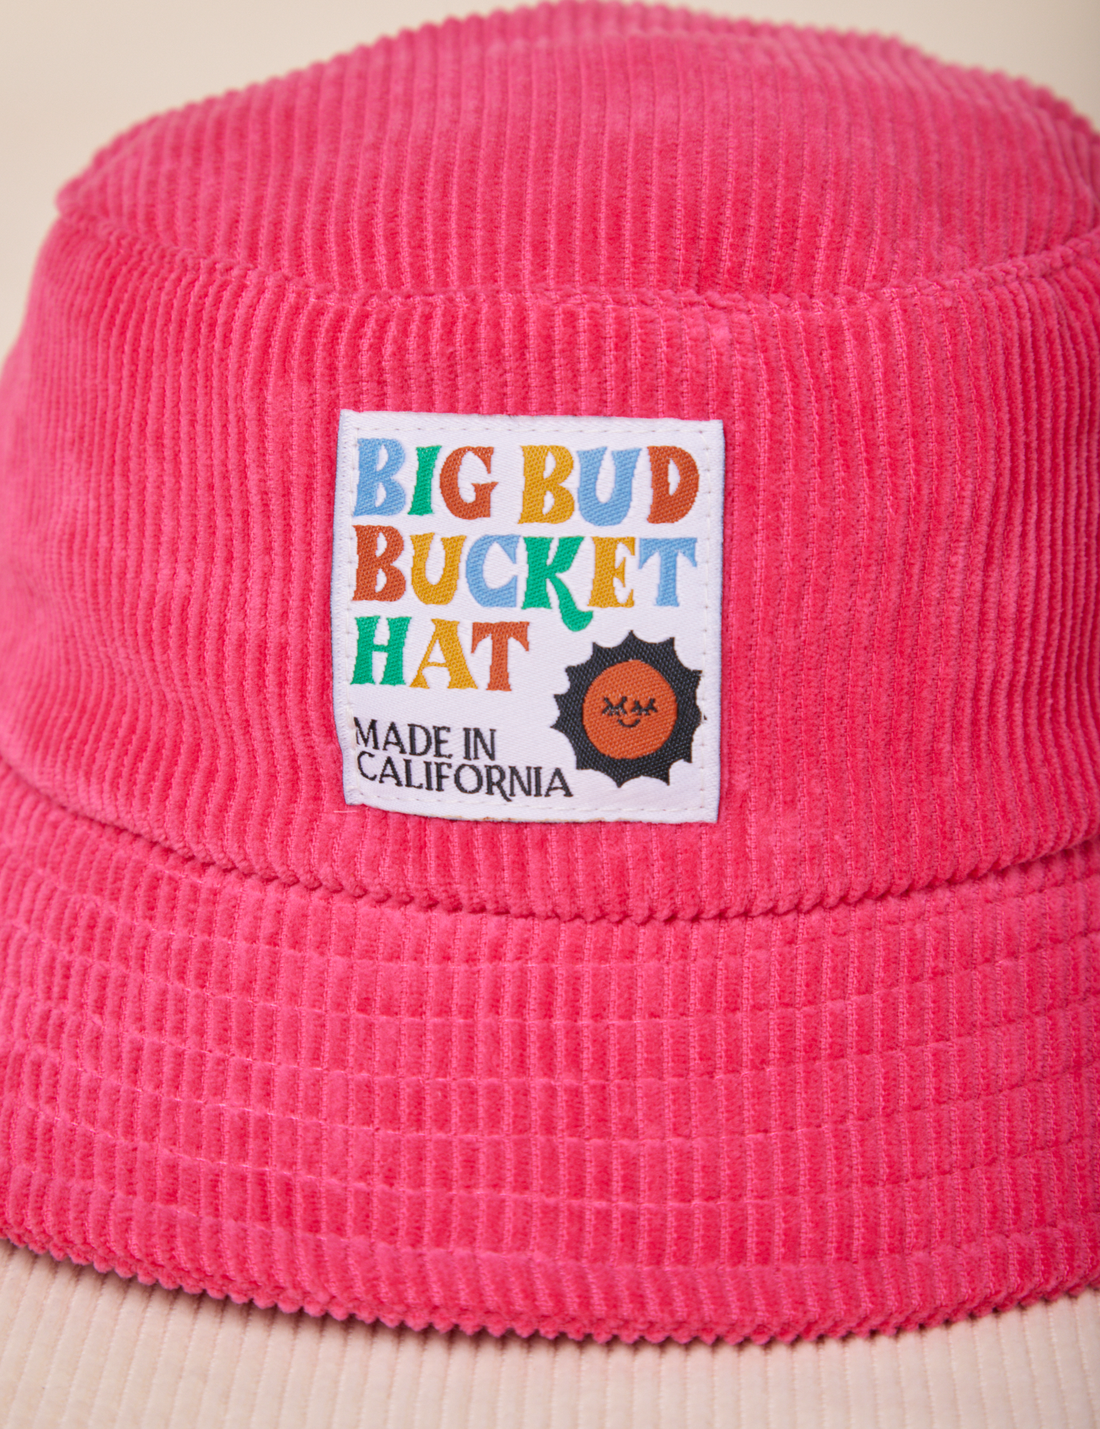 Big Bud Bucket Hat in hot pink